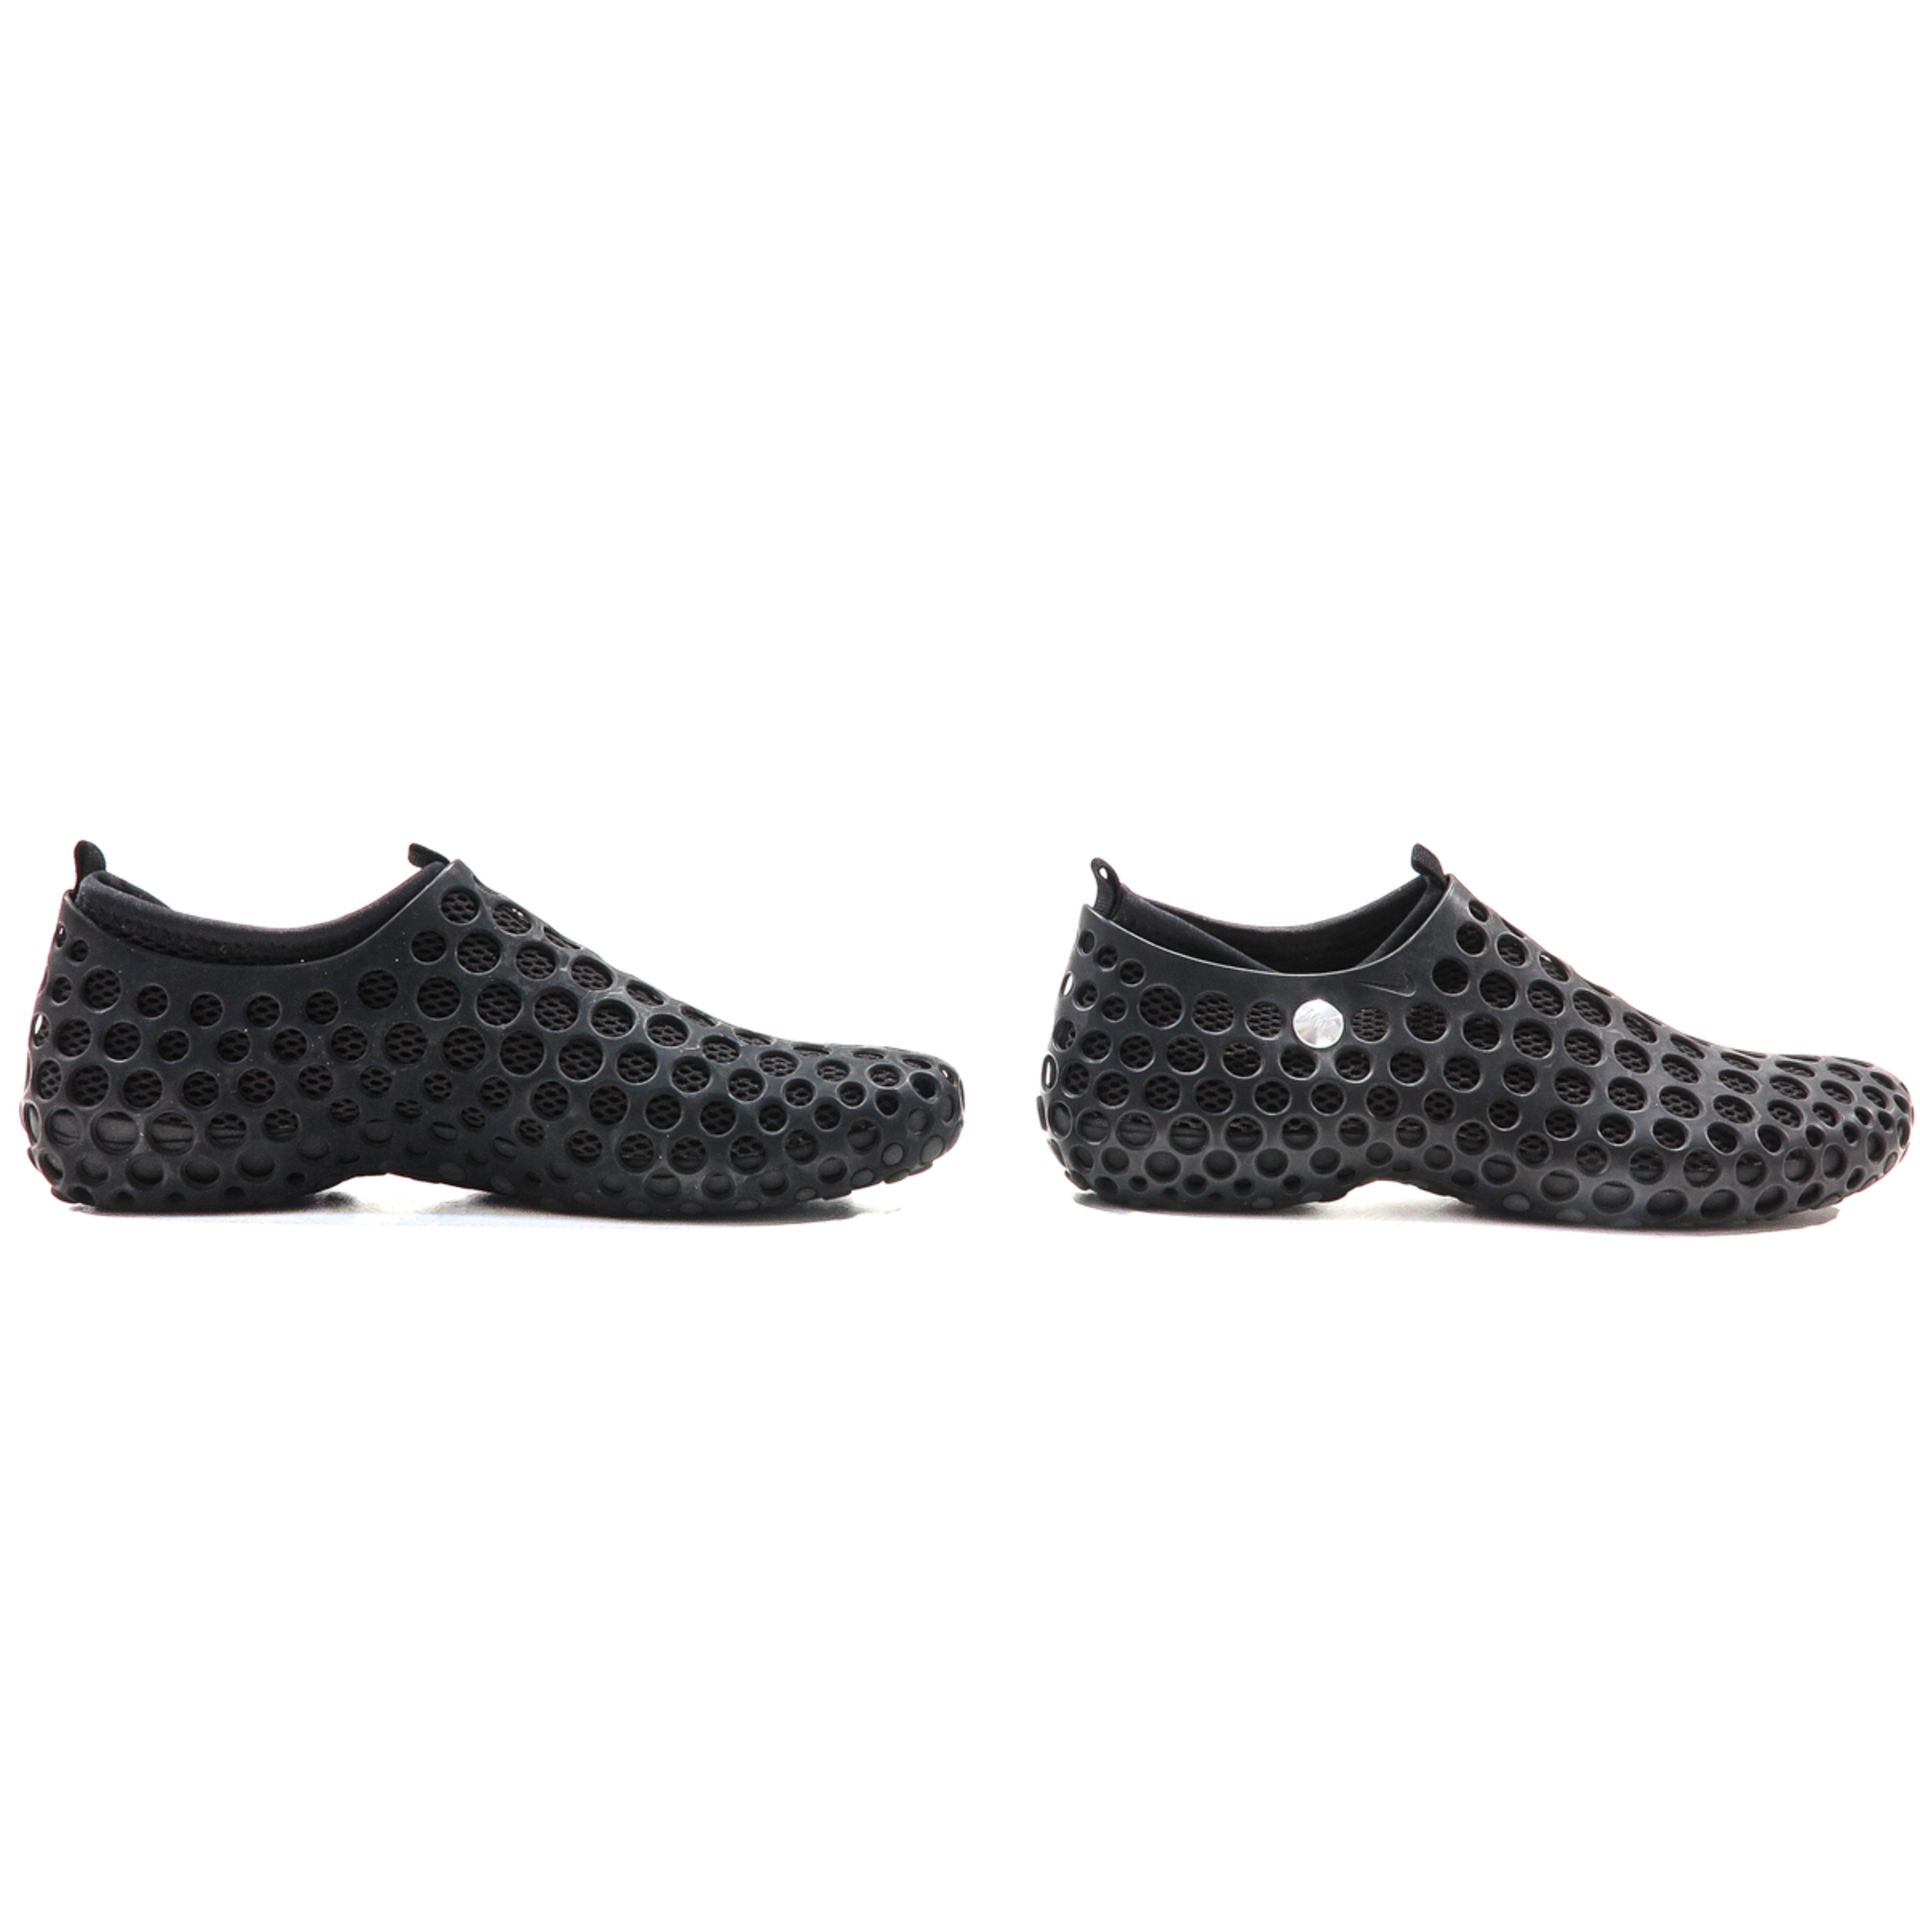 A Pair of Nike Zvezdochka Shoes - Bild 3 aus 10